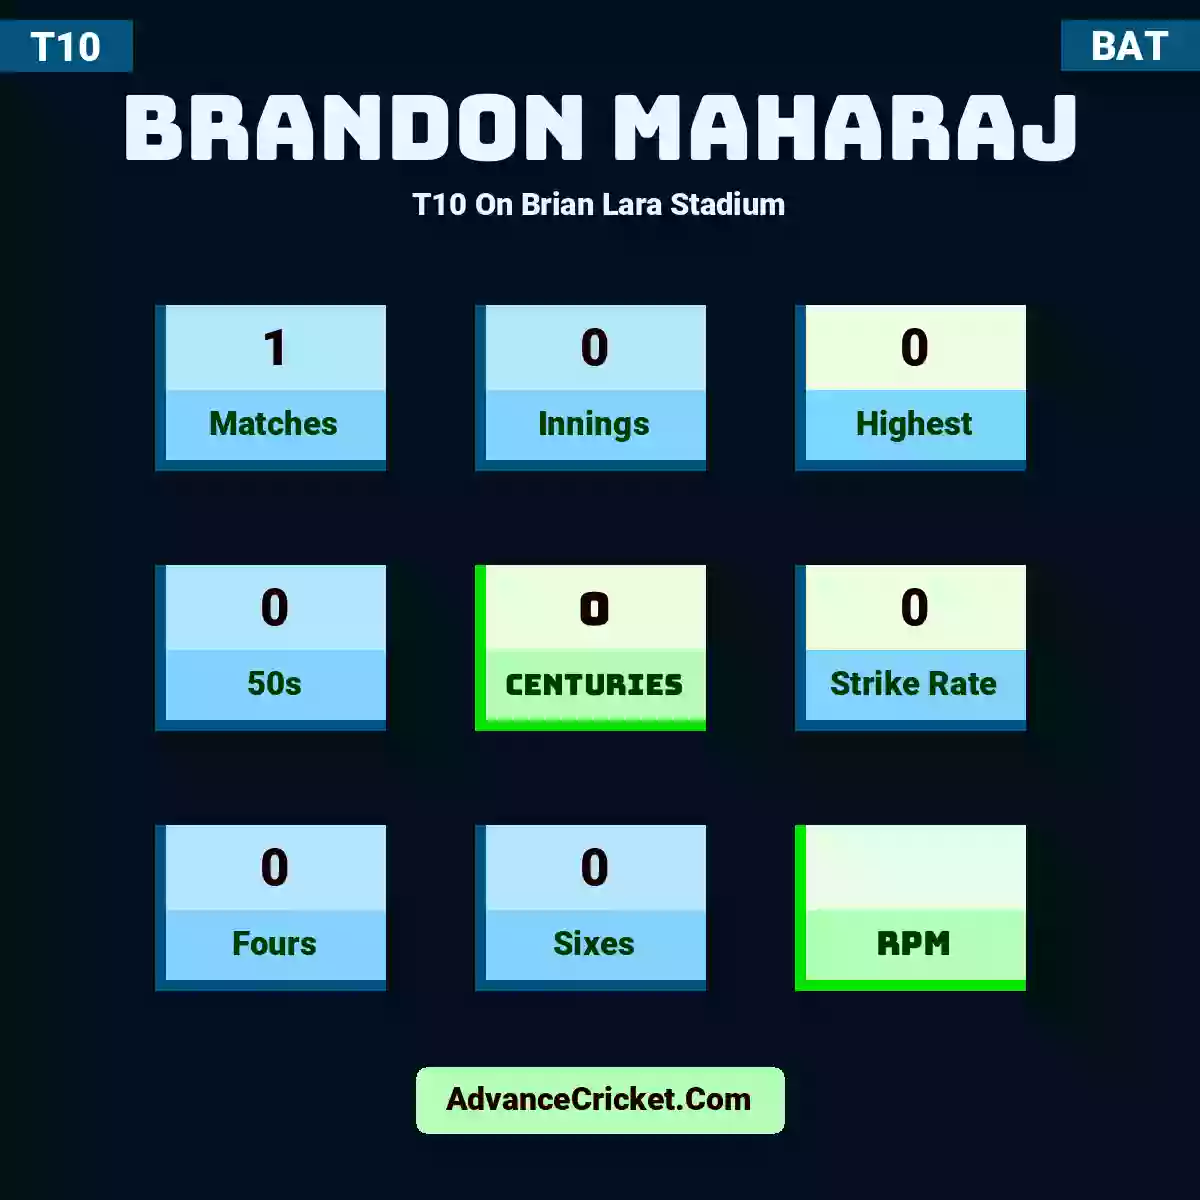 Brandon Maharaj T10  On Brian Lara Stadium, Brandon Maharaj played 1 matches, scored 0 runs as highest, 0 half-centuries, and 0 centuries, with a strike rate of 0. B.Maharaj hit 0 fours and 0 sixes.